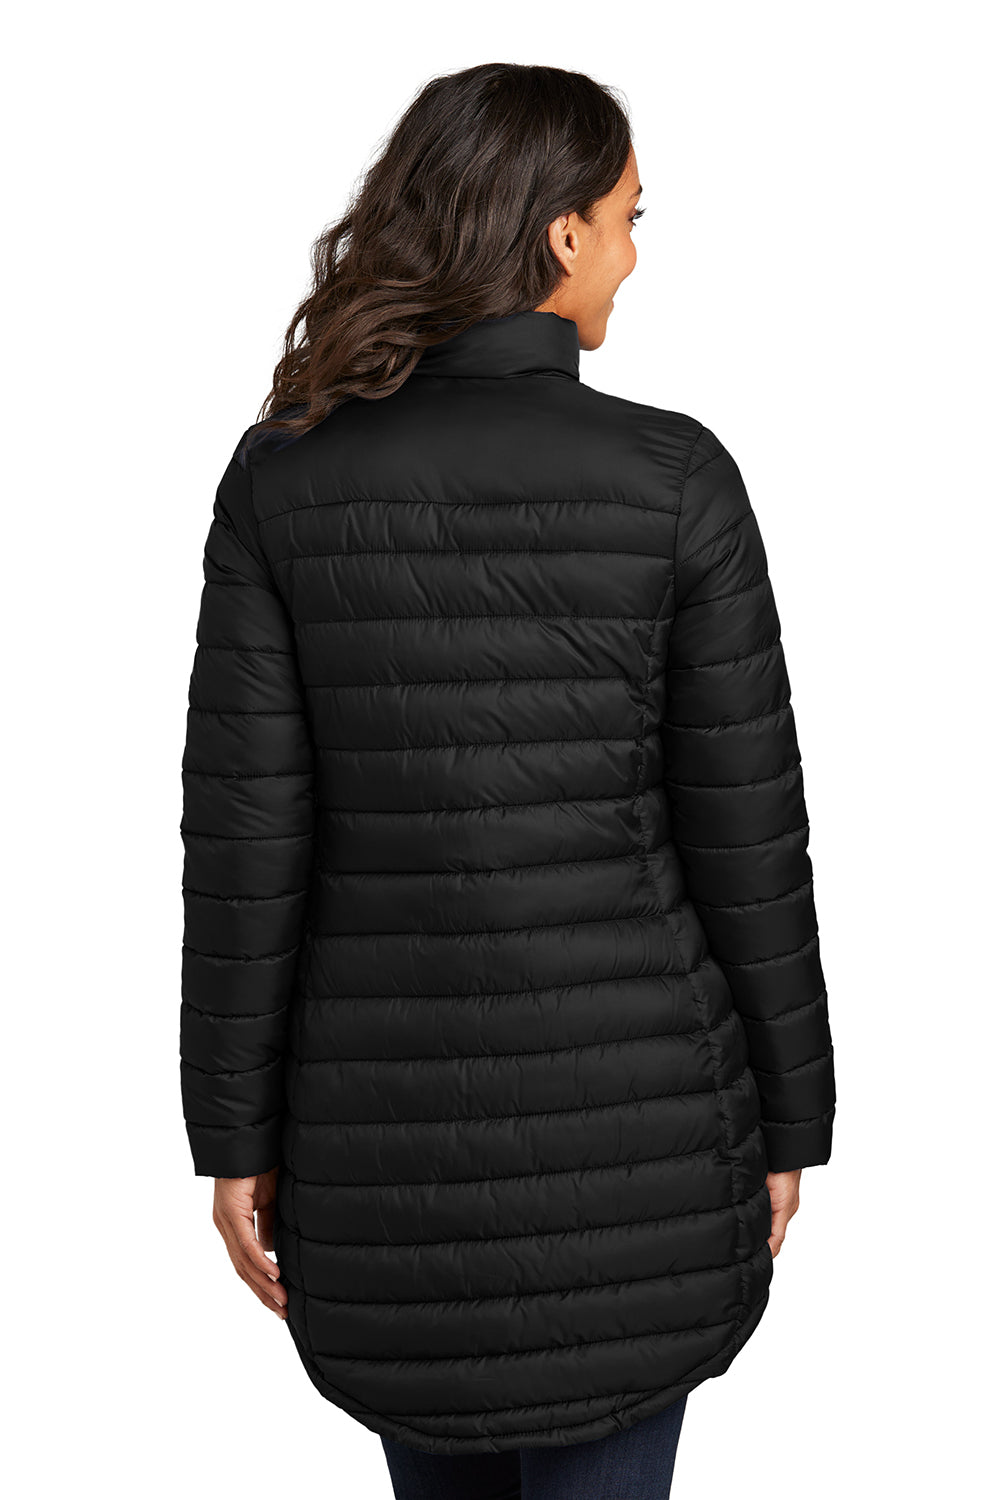 Port Authority L365 Womens Horizon Full Zip Long Puffy Jacket Deep Black Back